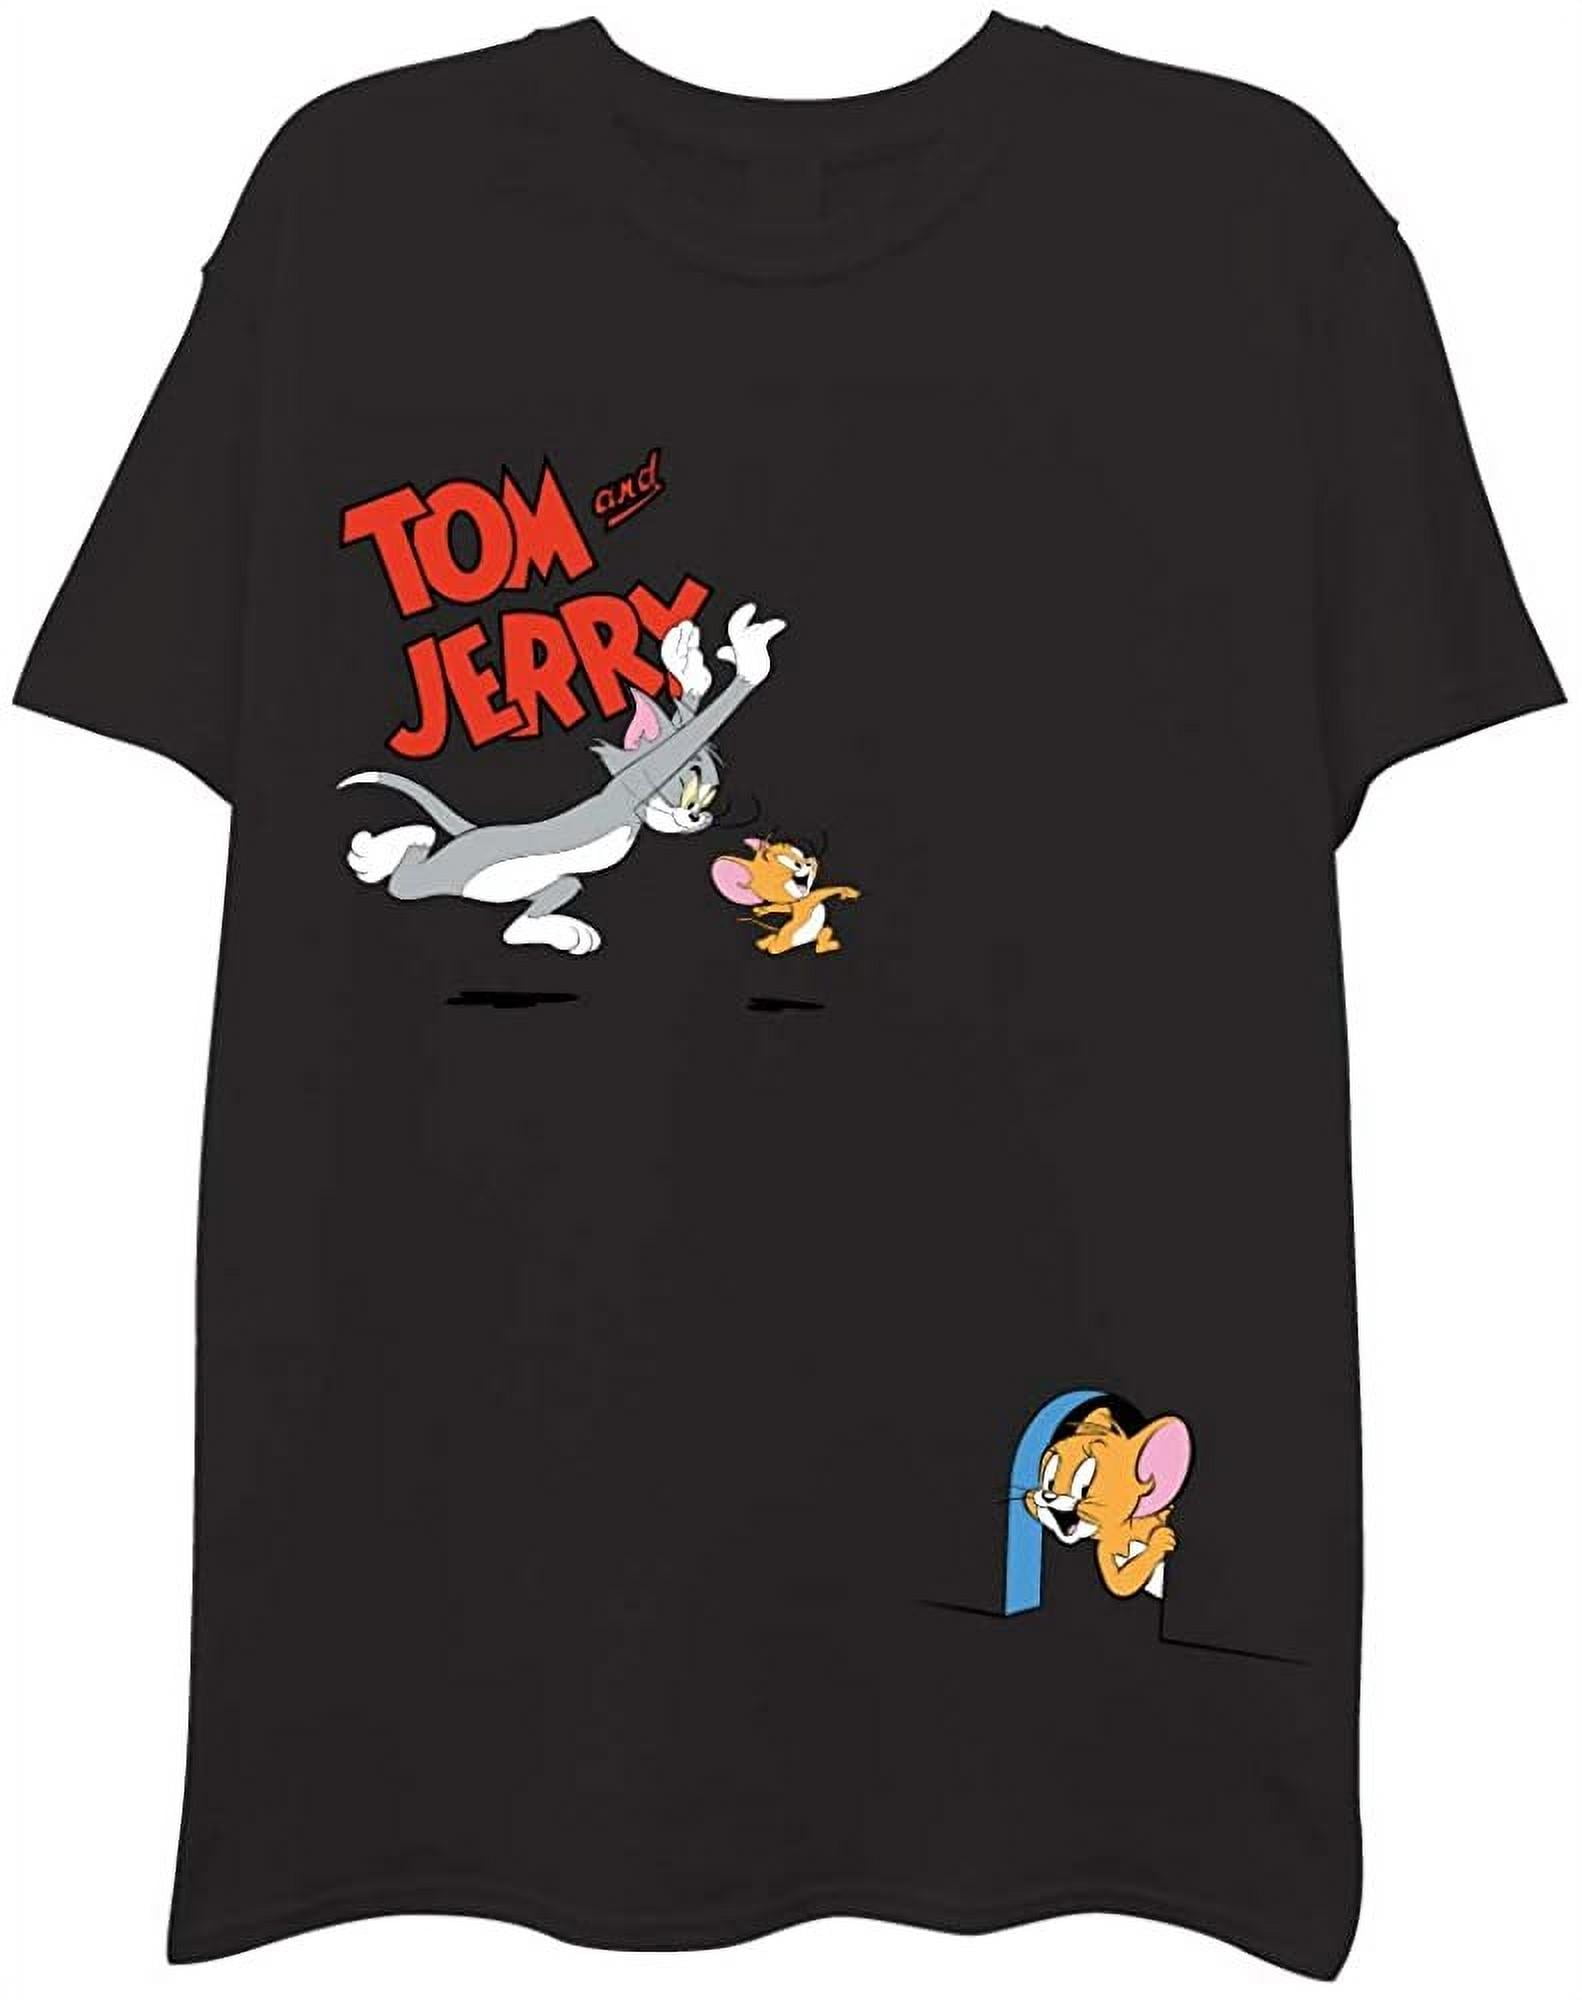 & Cartoon Classic Hanna-Barbera - Shirt Tom T-Shirt - Jerry Battle Mens Chase Tee Vintage